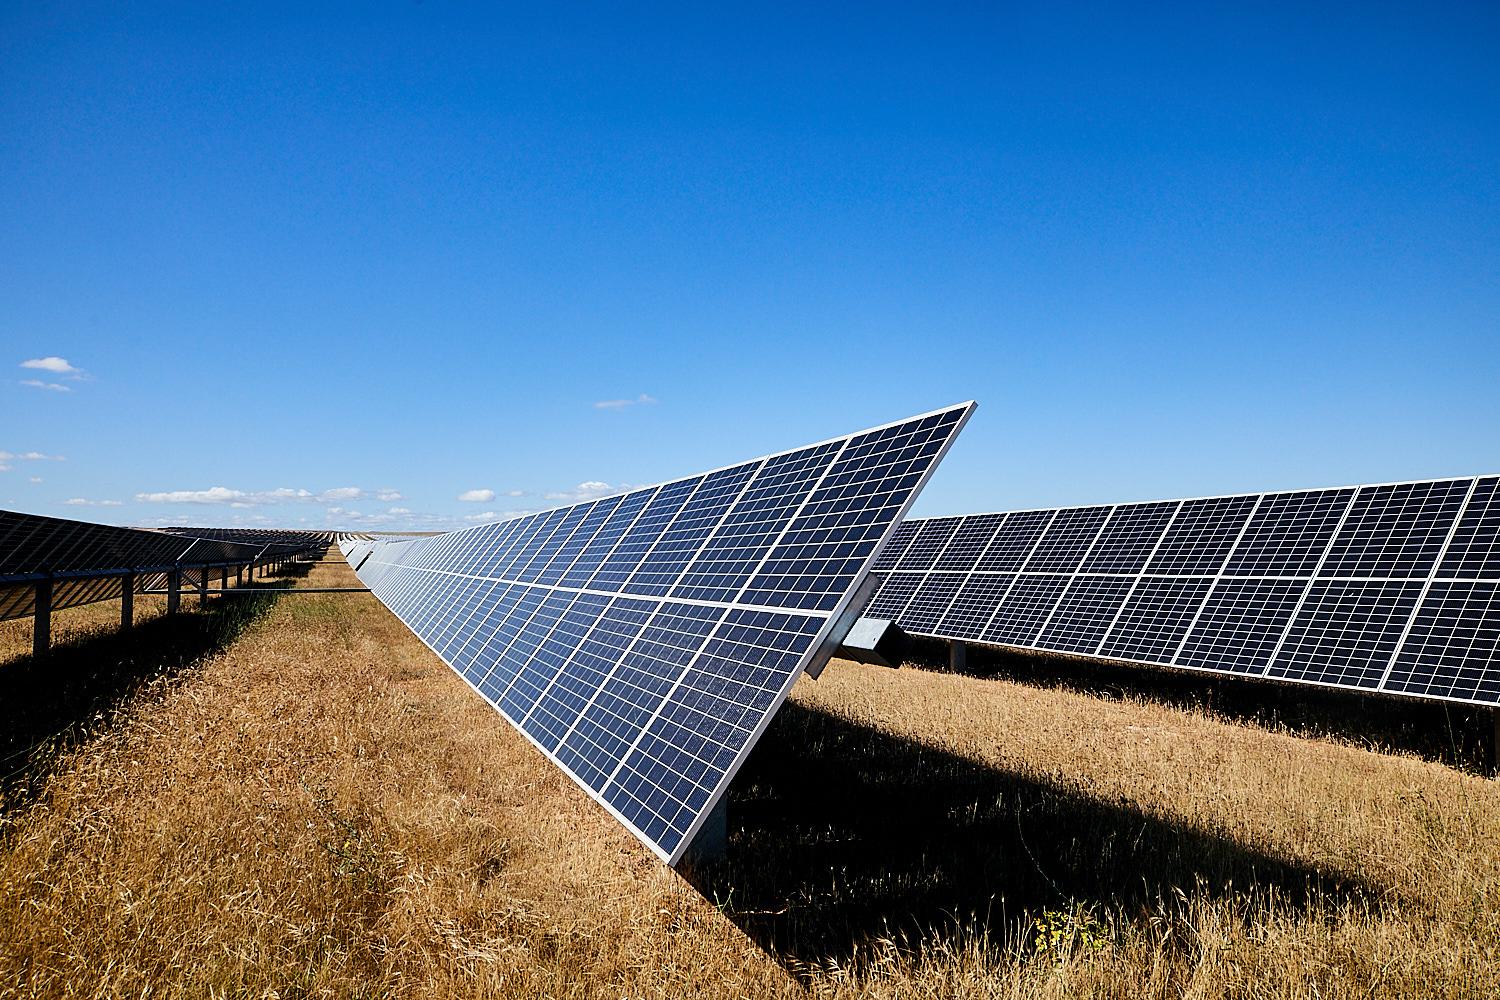 Lightsource bp: Μπαίνουν τα θεμέλια ενός από τα μεγαλύτερα ηλιακά έργα στην Ευρώπη  